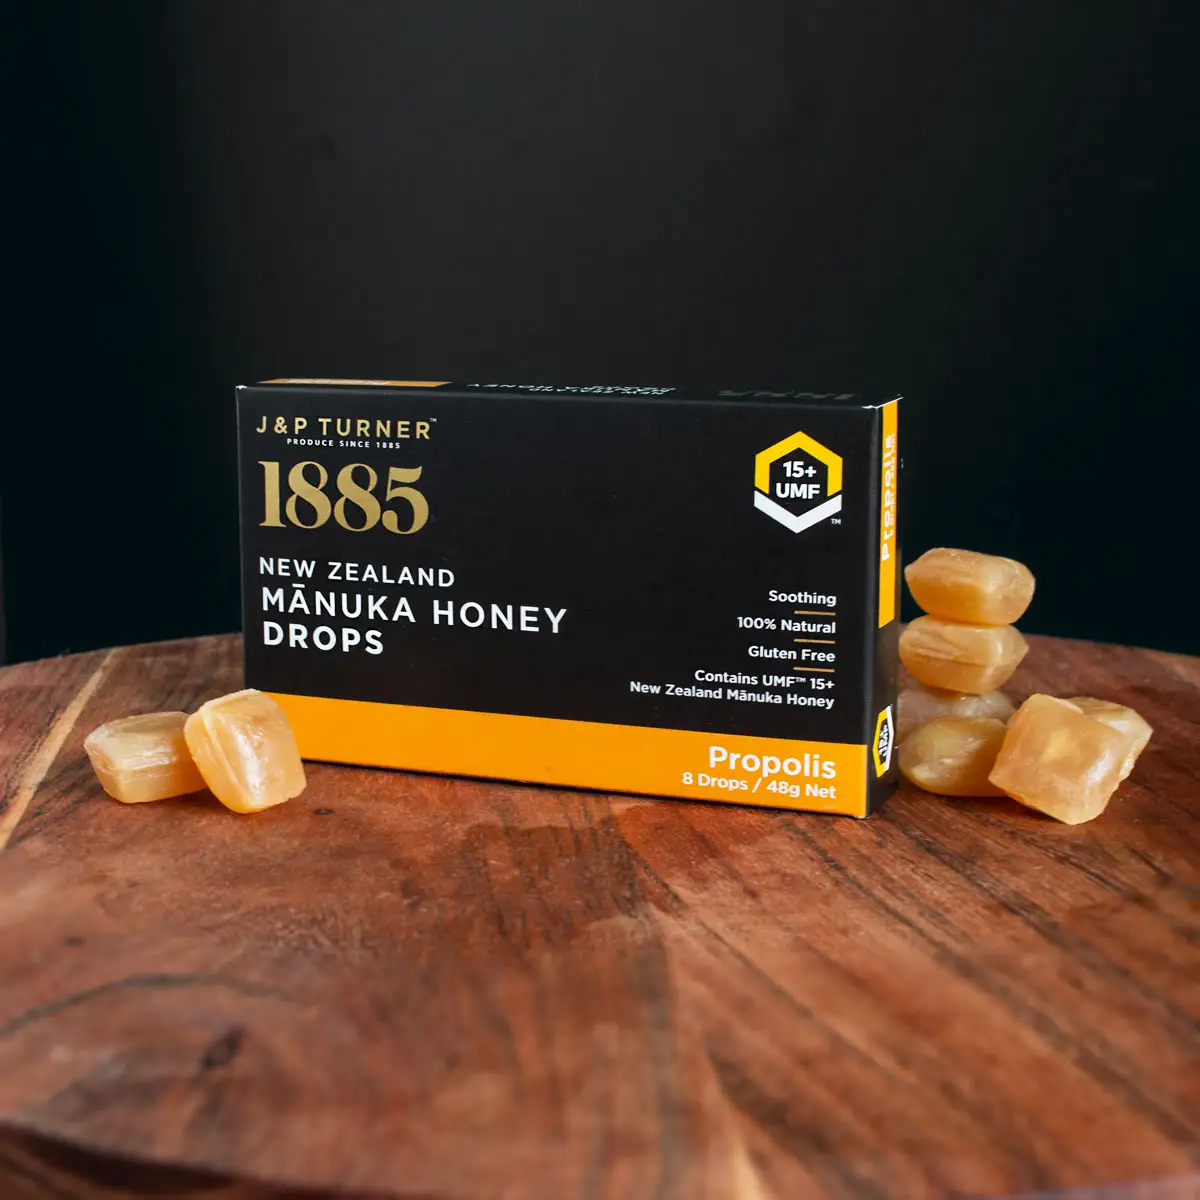 Manuka Honey Drops Propolis UMF 15+ New Zealand Made 100% Natural Soothing Lozenges Candy